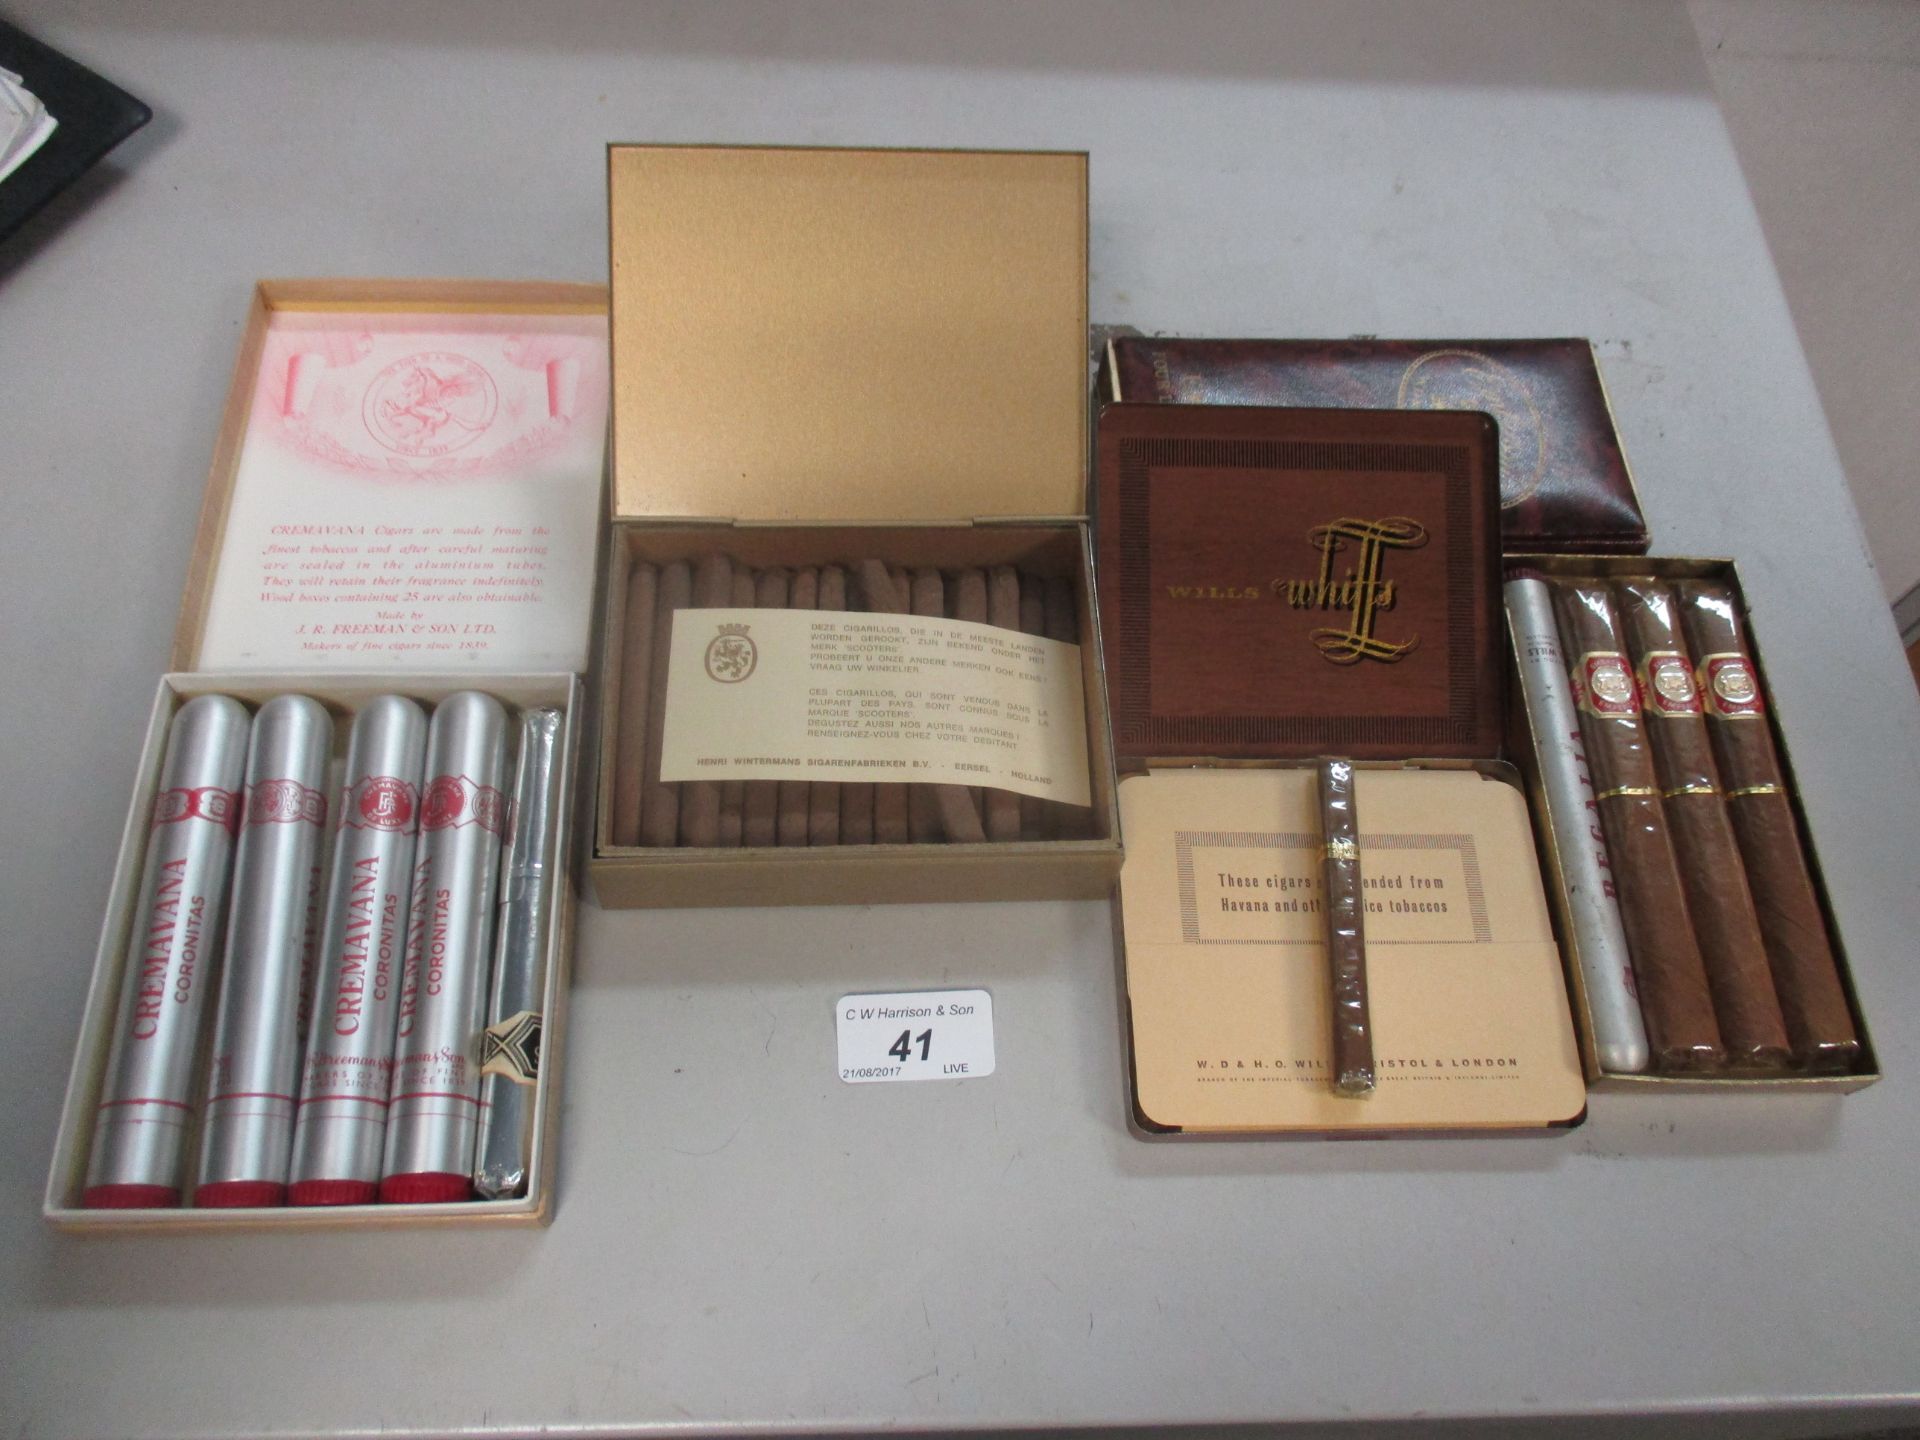 3 x 'Embassys' Emperor large Corona cigars, a Wills Regalia Panatella cigar,